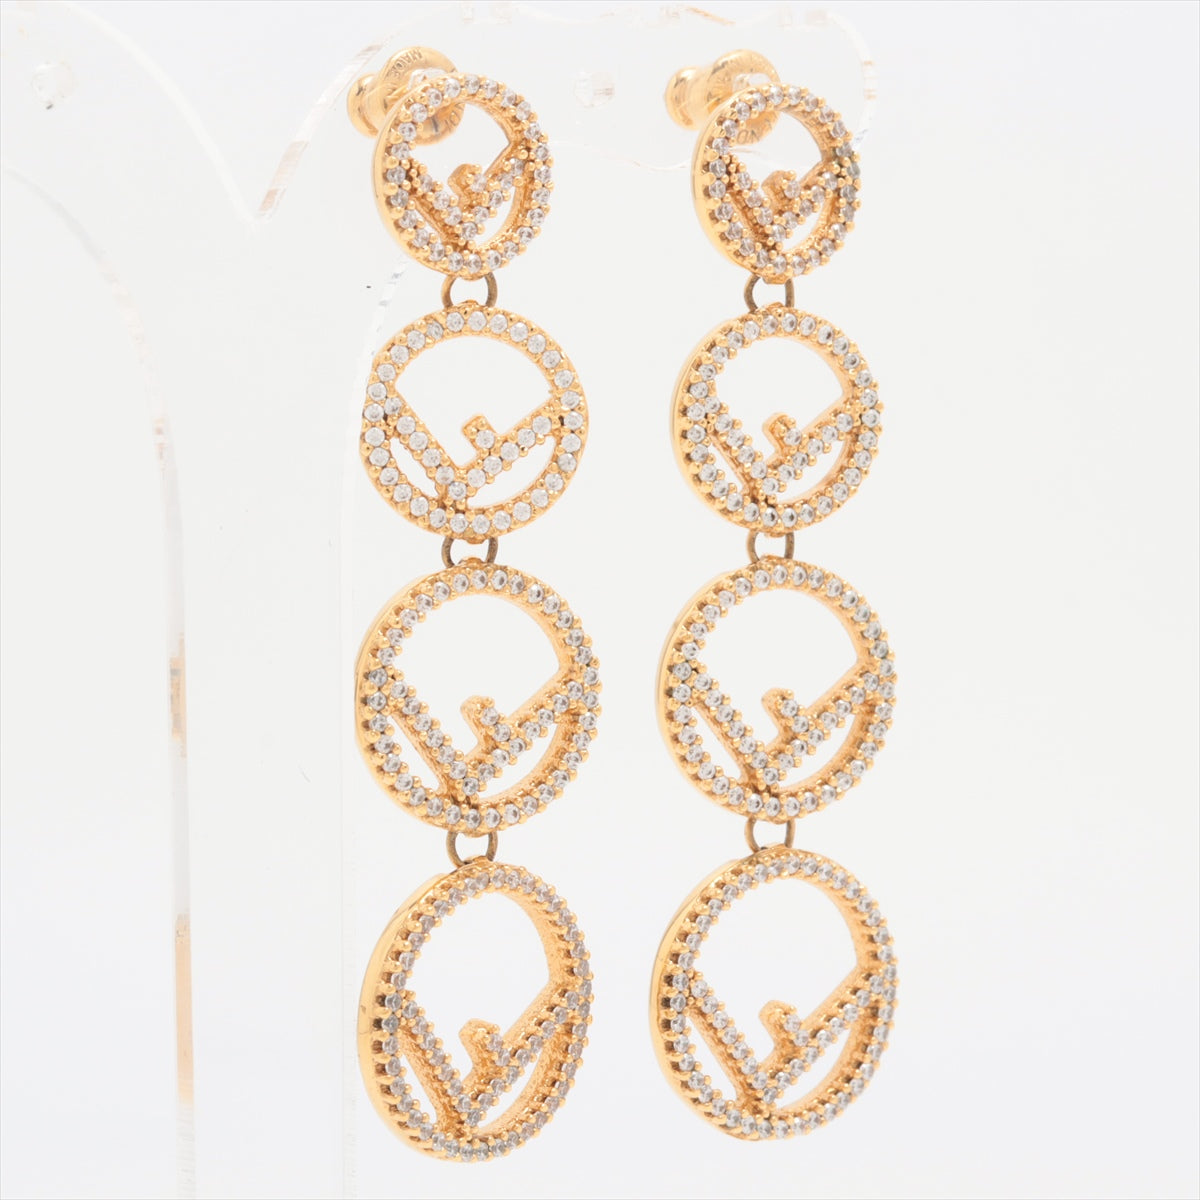 Fendi F is Fendi Piercing jewelry (for both ears) GP×inestone Gold